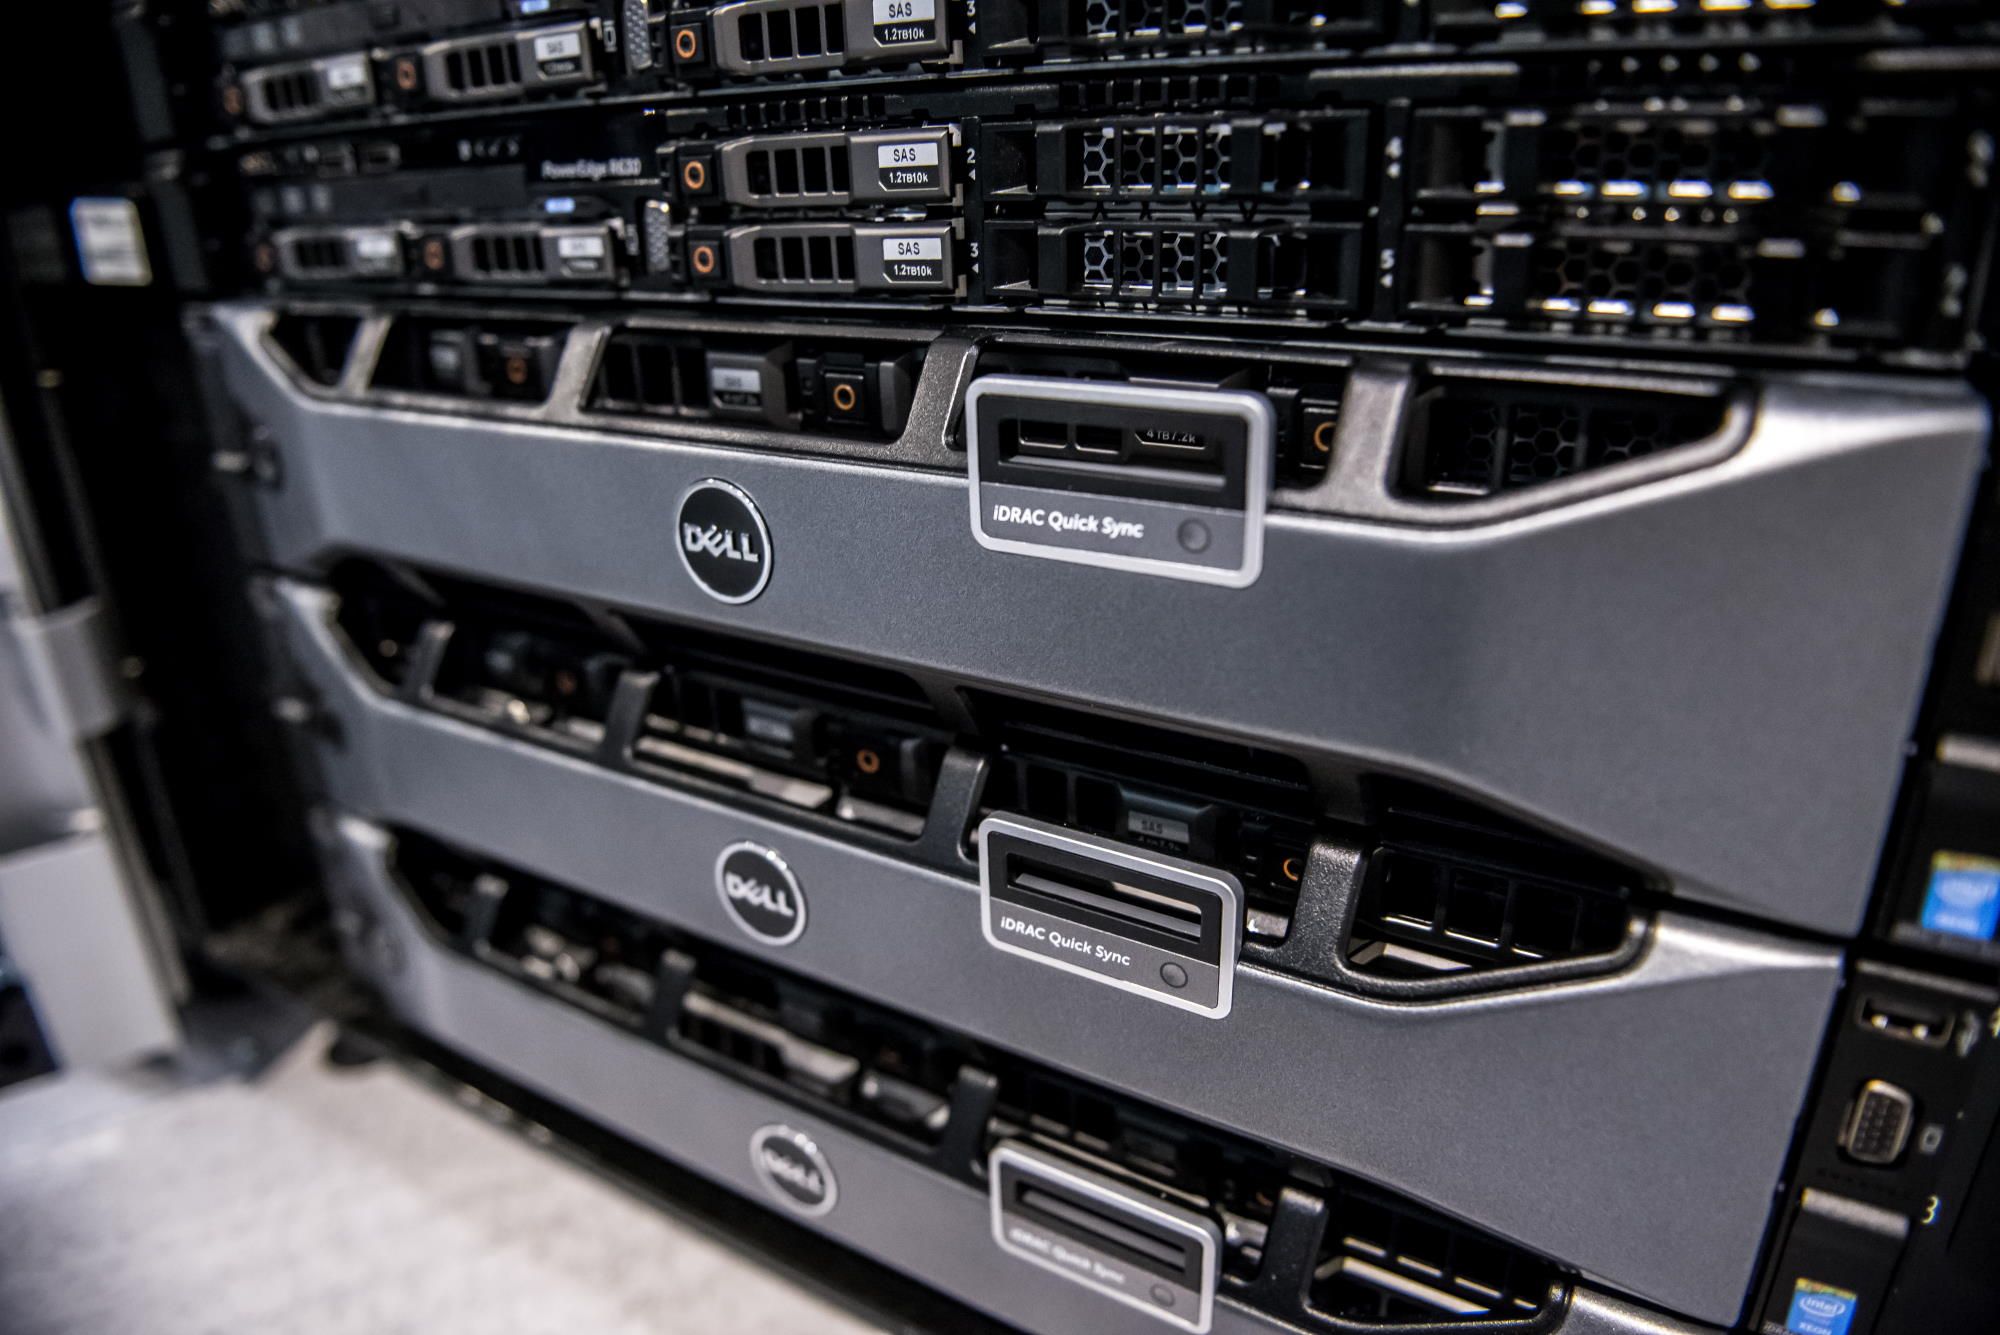 Quiet Fans on Dell PowerEdge Servers Via IPMI